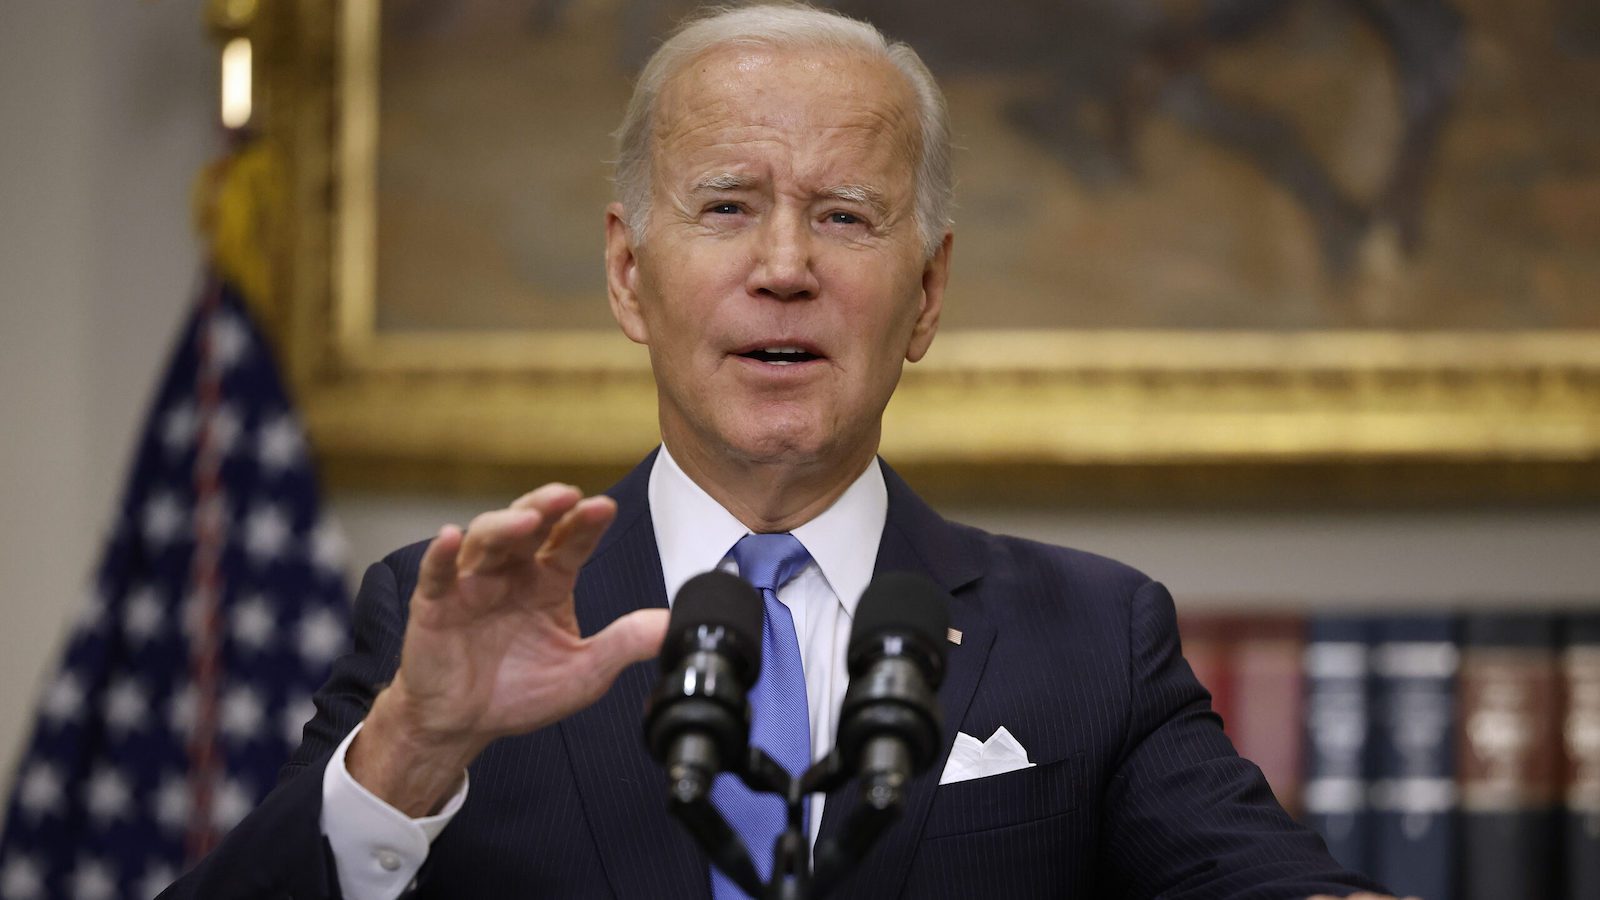 Biden Announces Pre-Midterm Pardon for 6,500 Marijuana Offenses